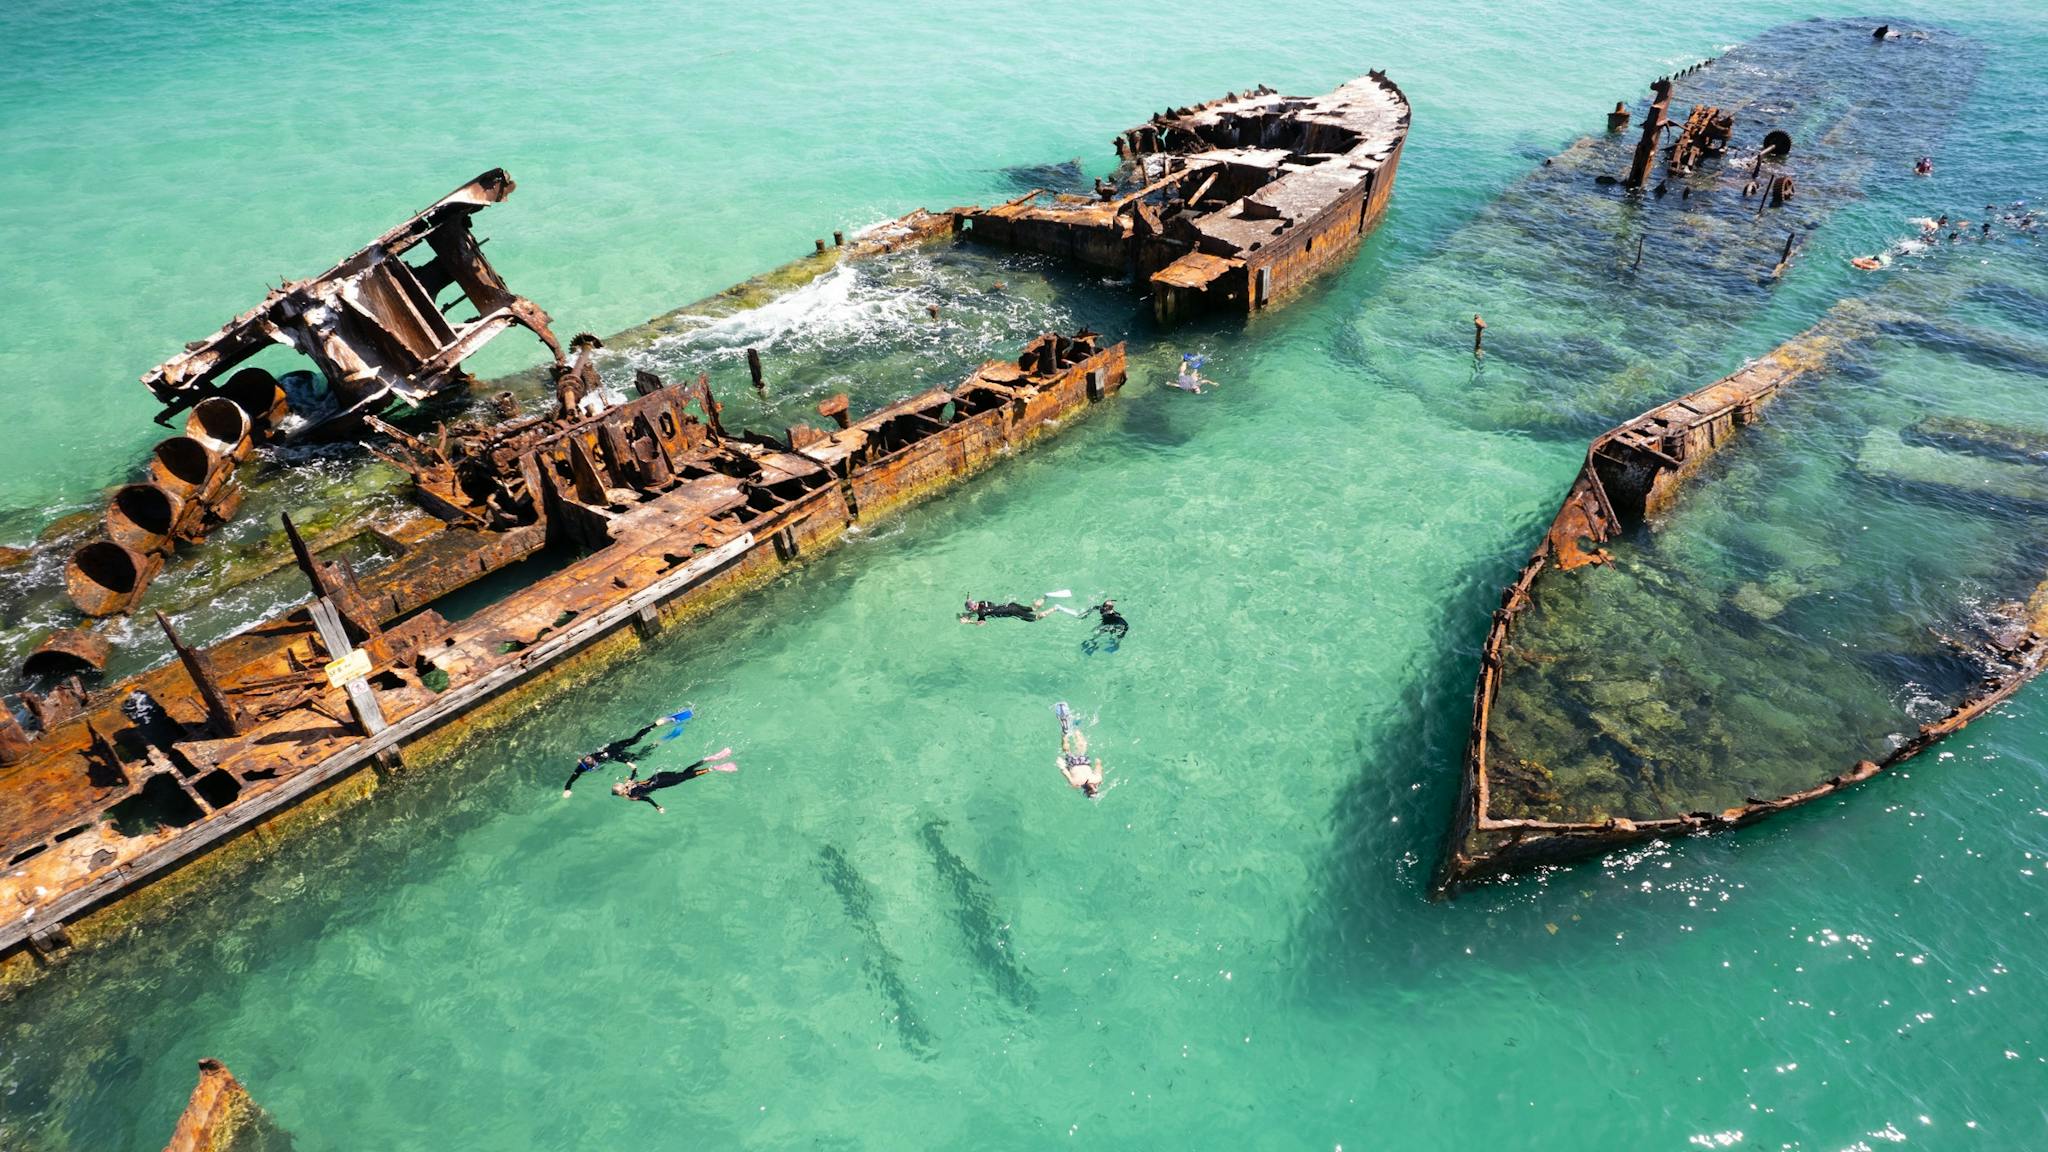 Snorkelling the tangaloomna wrecks